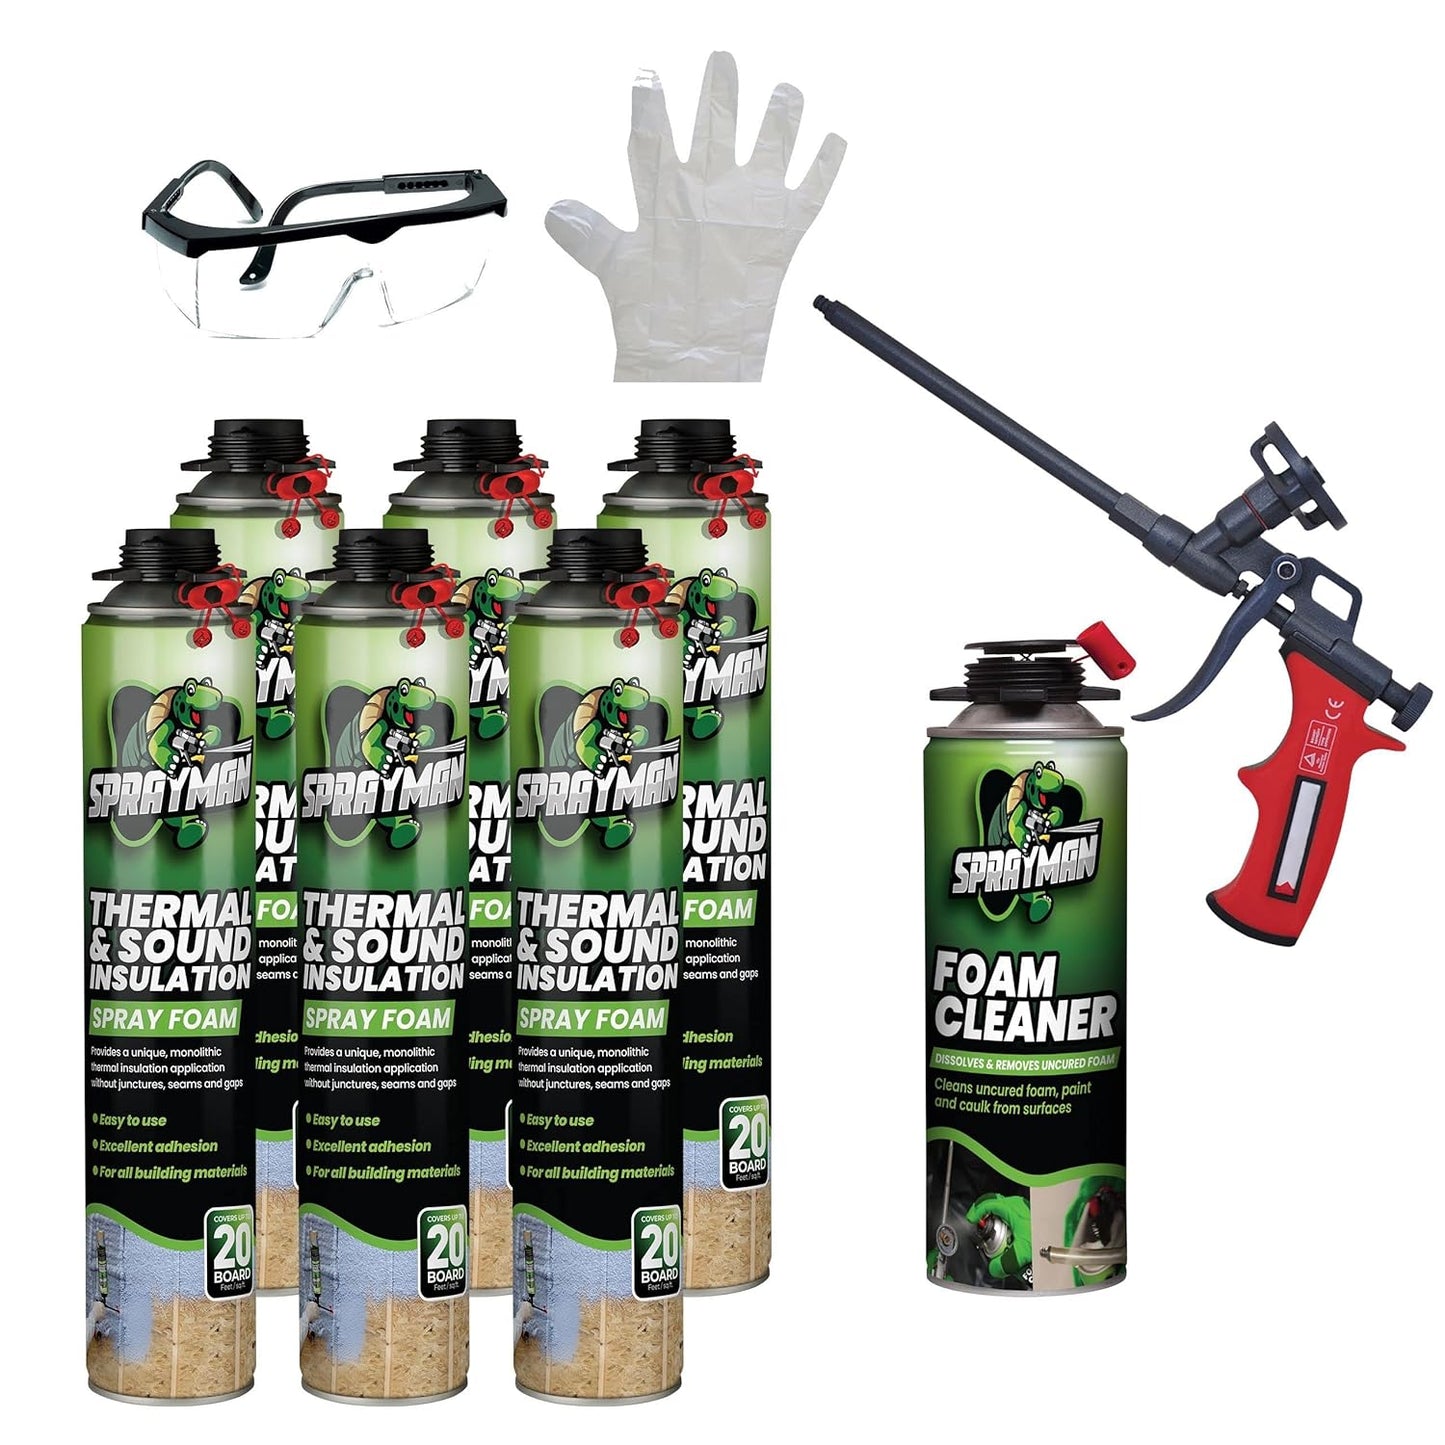 Sprayman Thermal & Sound Insulation Spray Foam 6 Can + Foam Cleaner + Foam Gun +Eye Protection + Glove